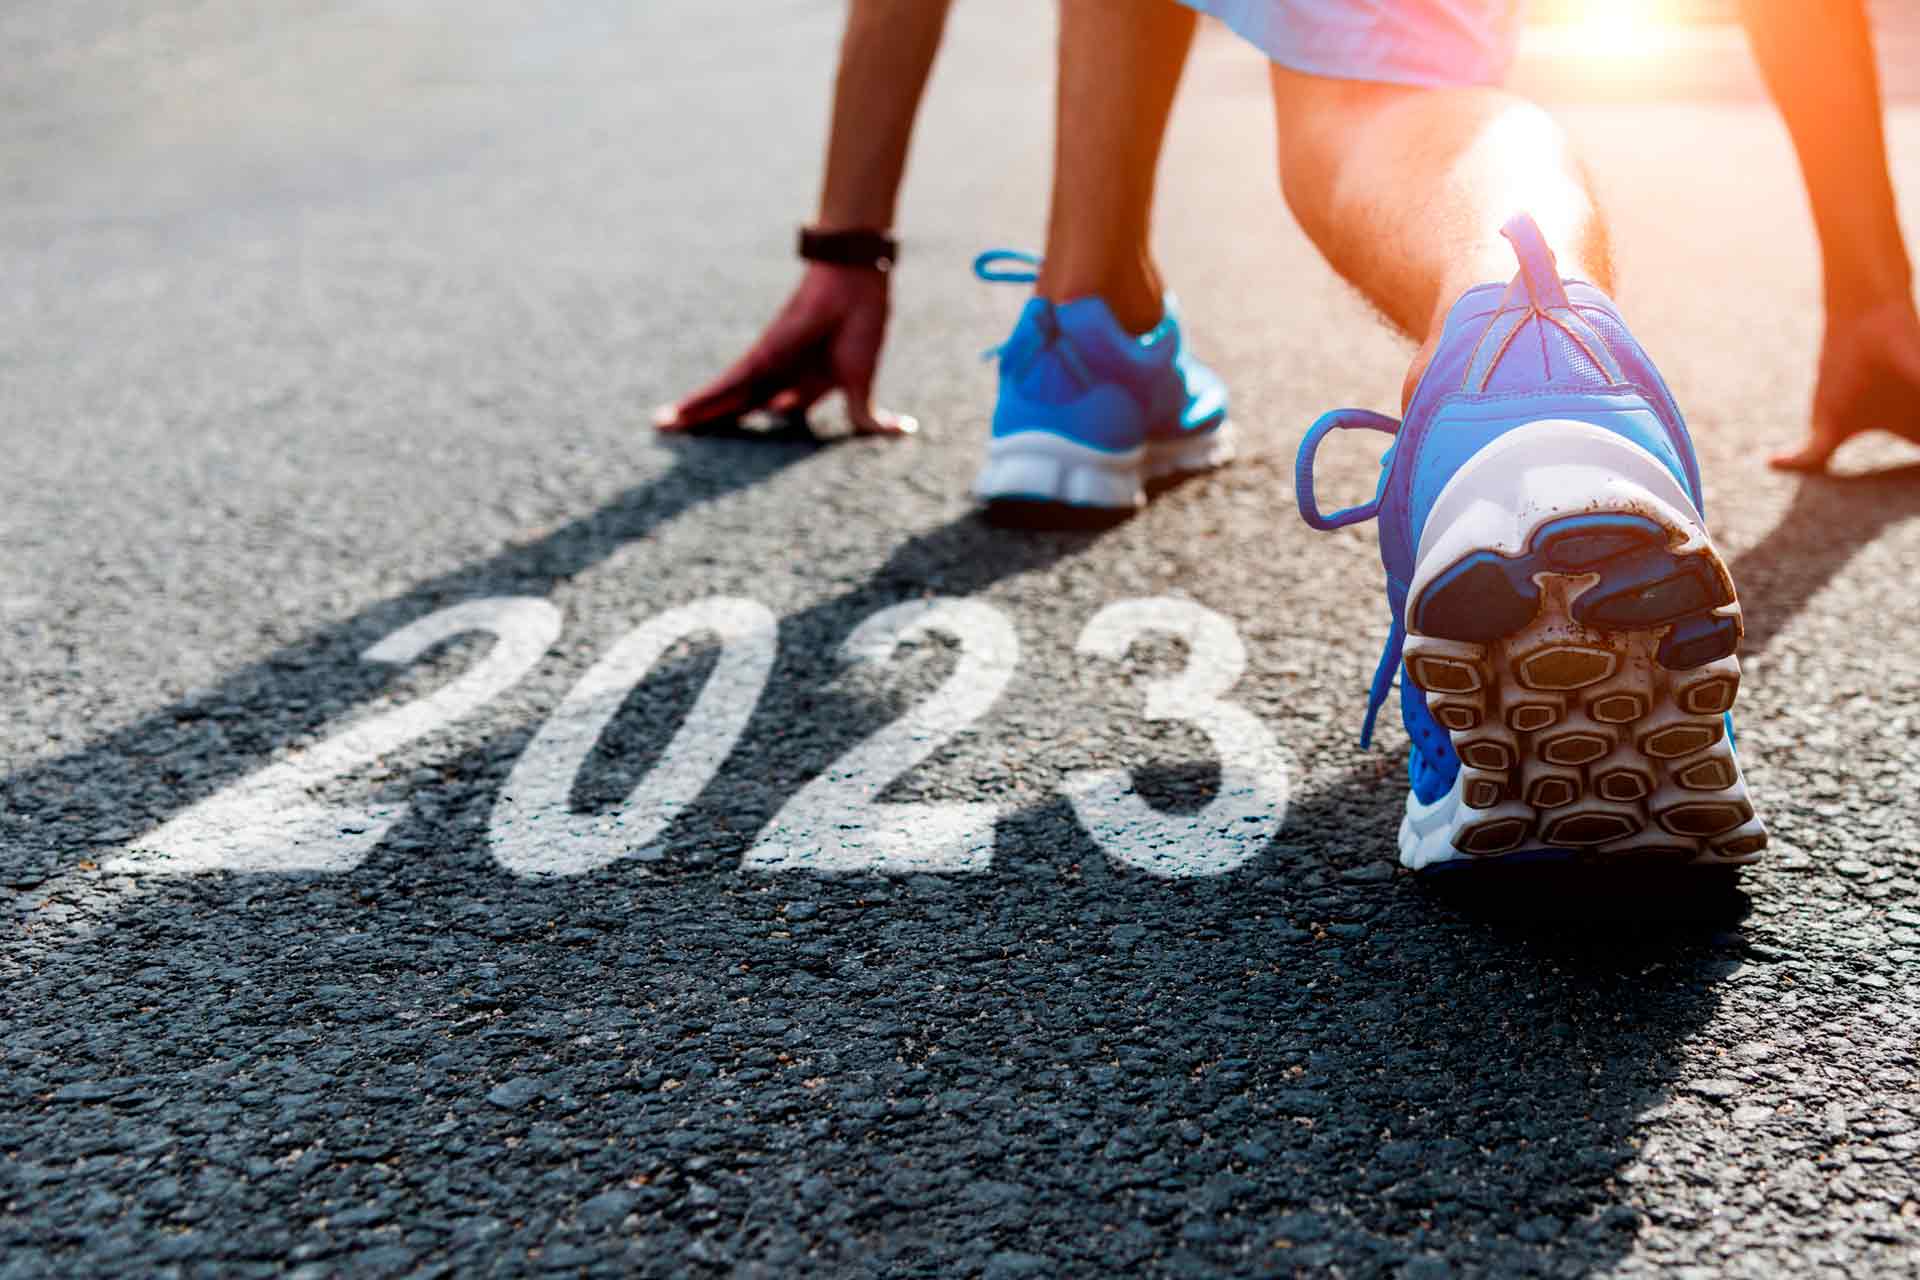 Cumple tus propósitos para 2023: Lanza tus ideas en tan solo 10 días